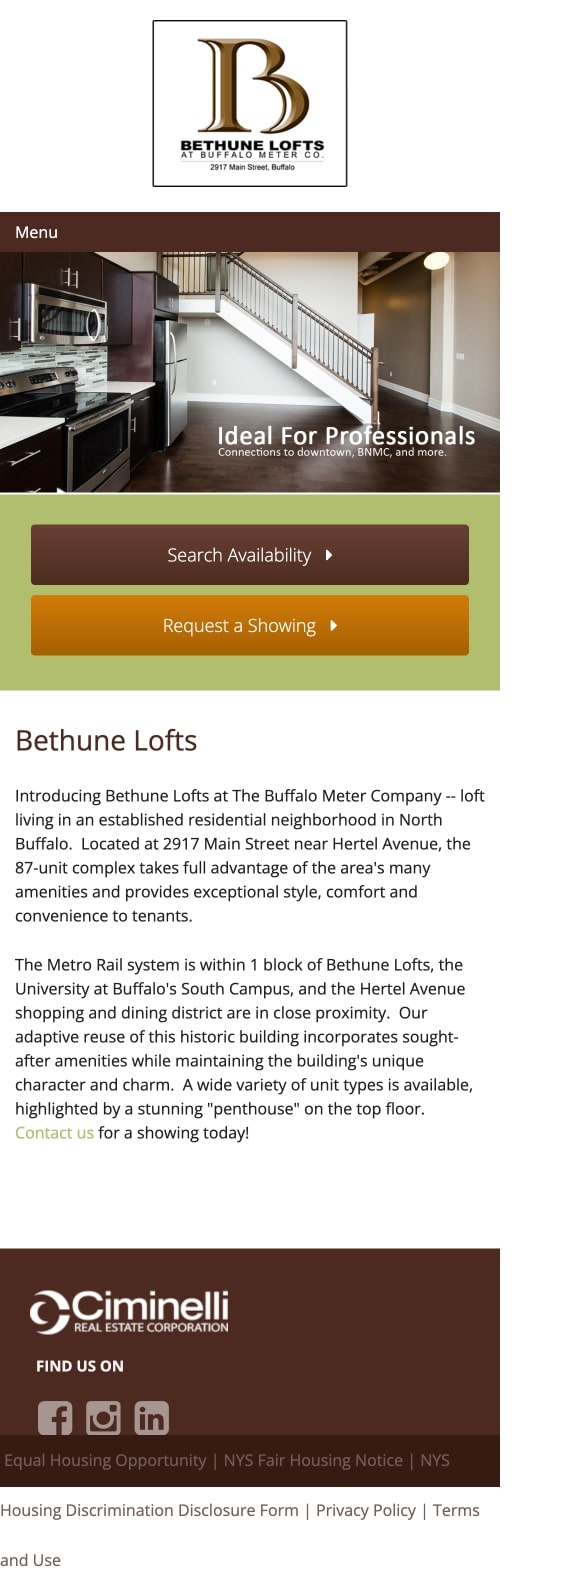 Bethune Lofts Website - Mobile